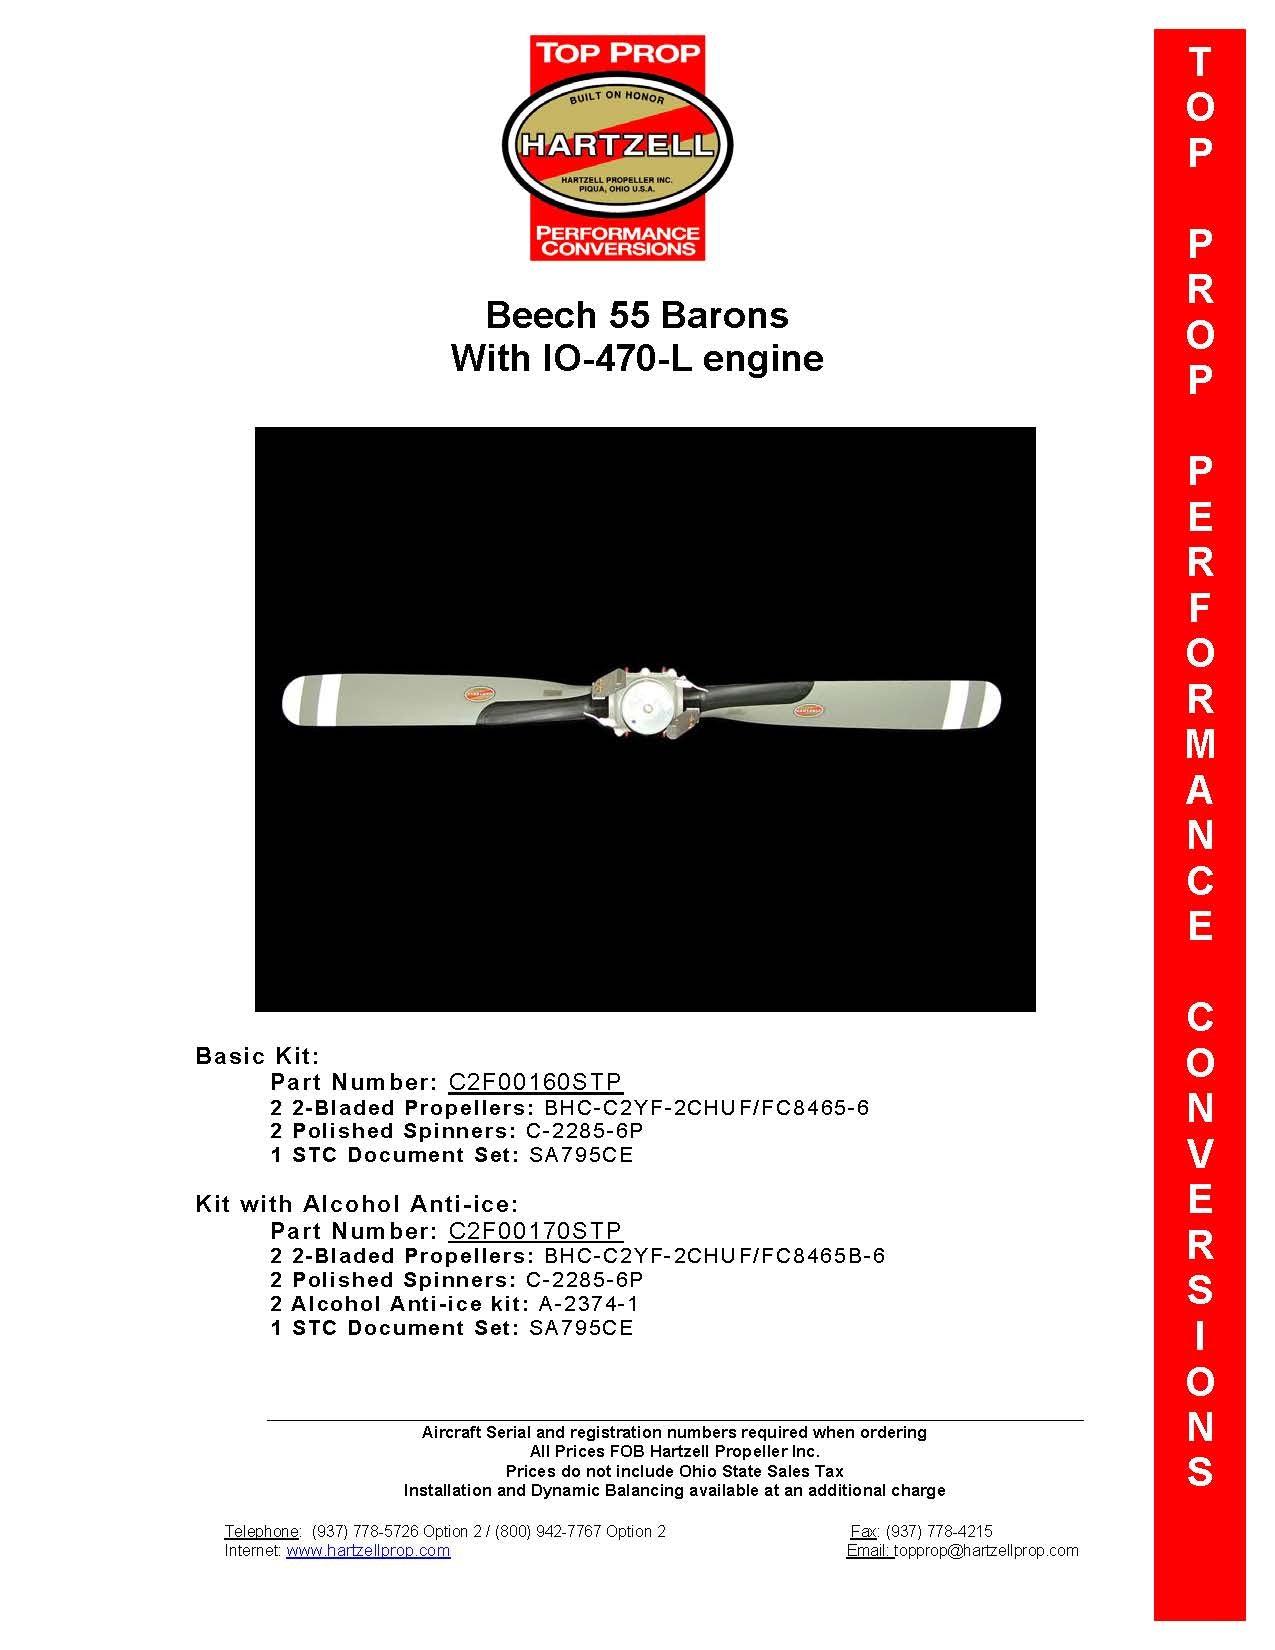 BEECH-55-BARON-IO-470-L-C2F00170STP-PAGE-1